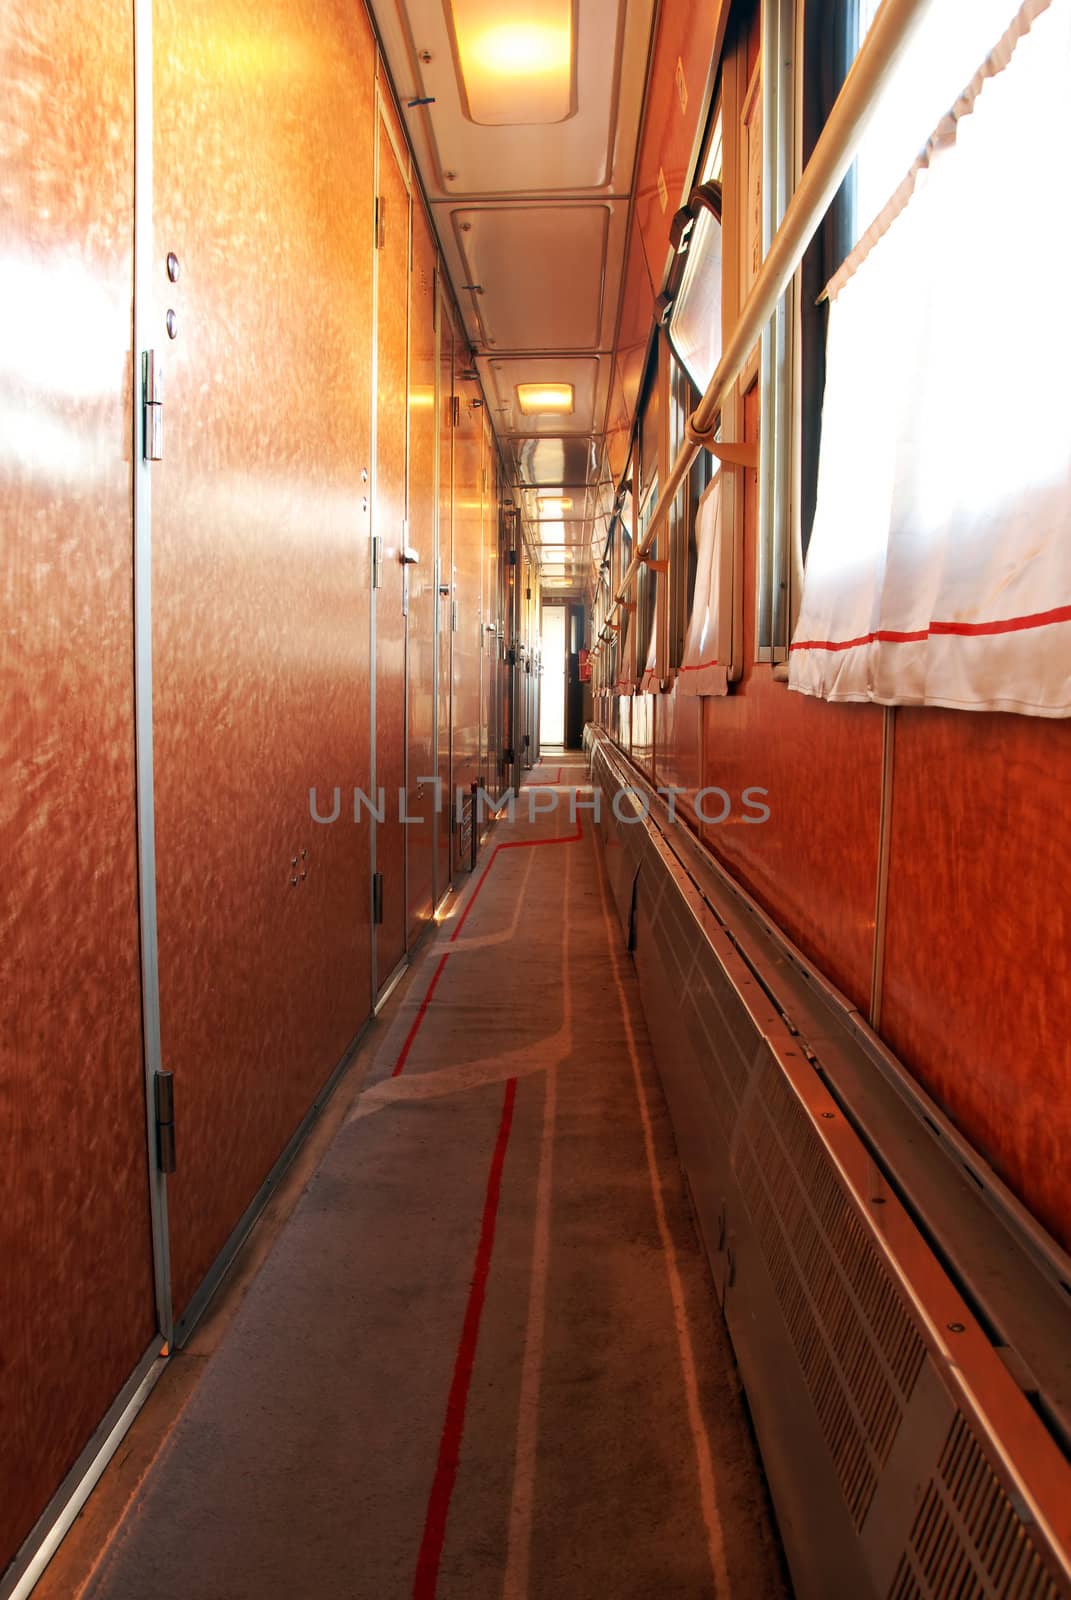 Train wagon corridor by simply